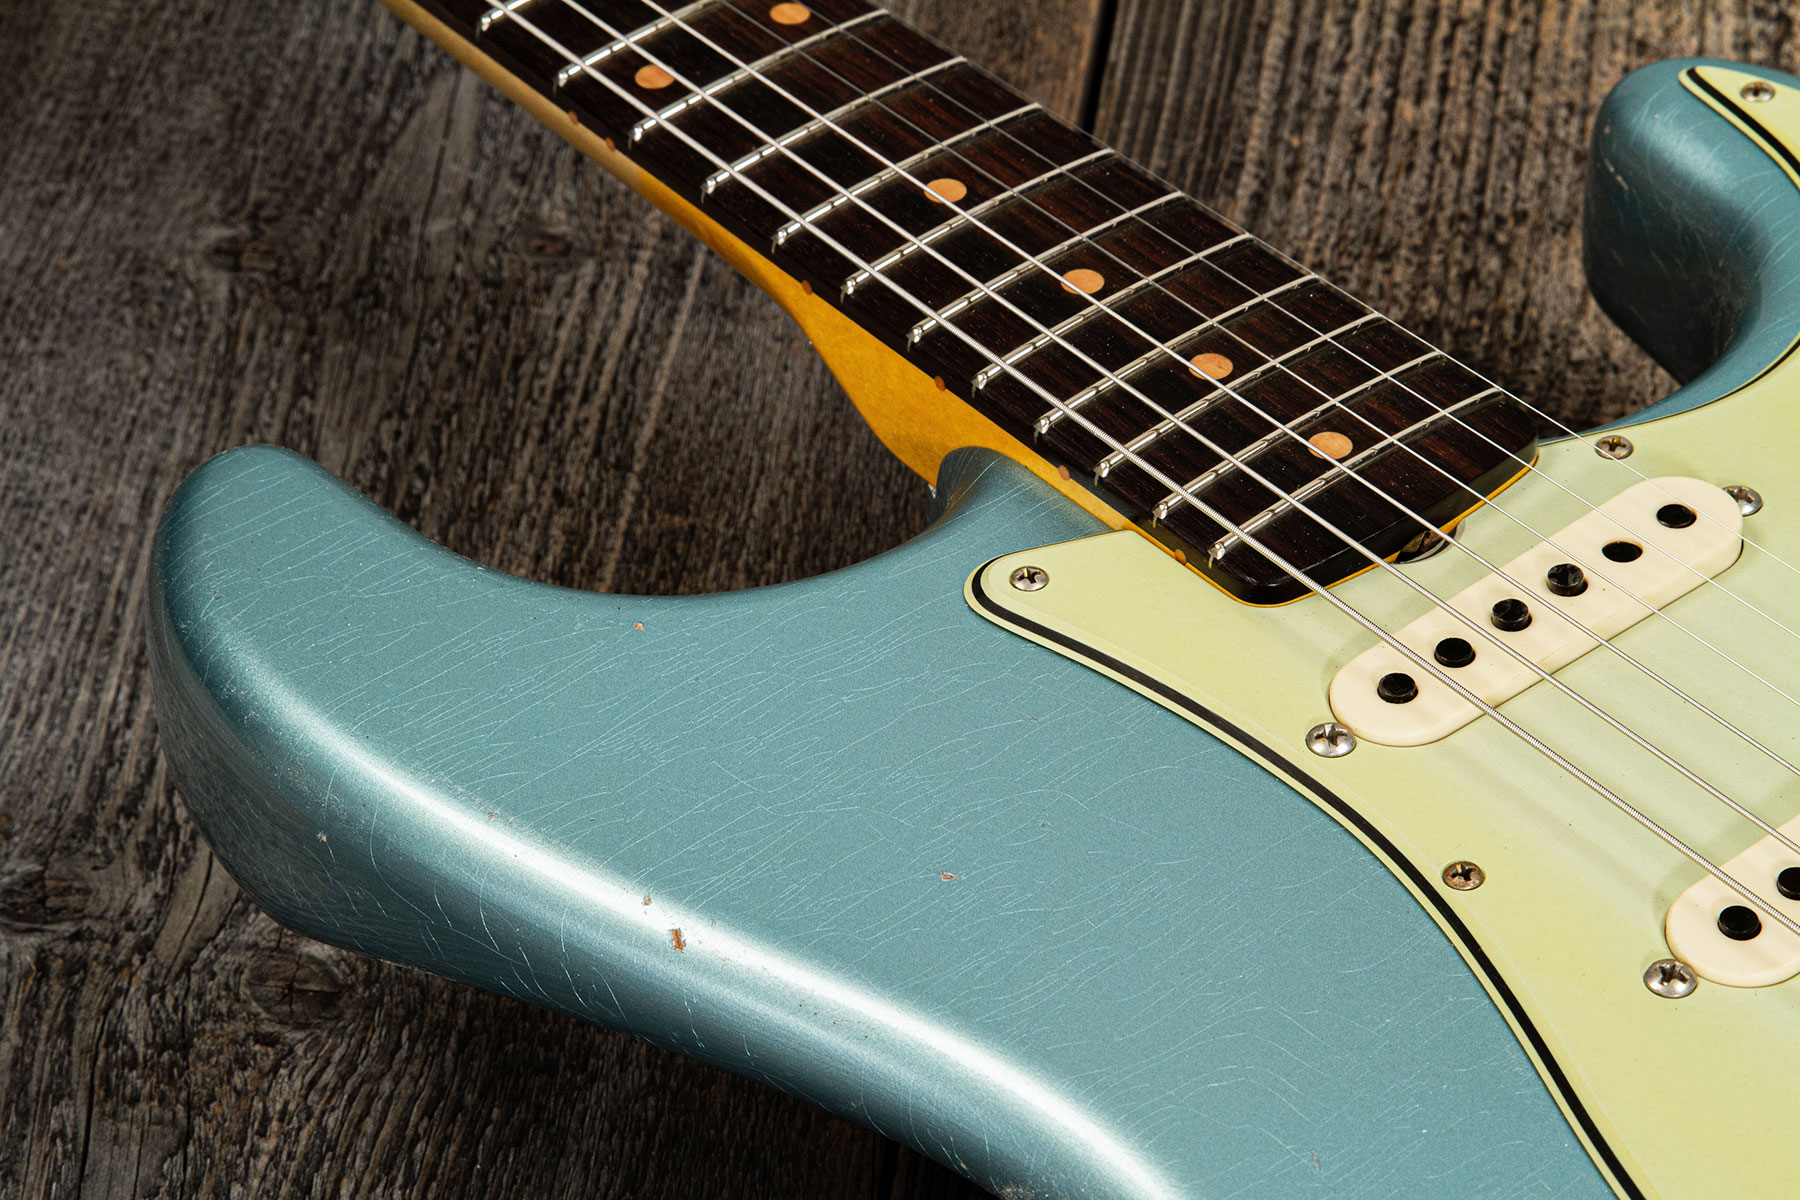 Fender Custom Shop Strat 1959 3s Trem Rw #cz566857 - Journeyman Relic Teal Green Metallic - Str shape electric guitar - Variation 4